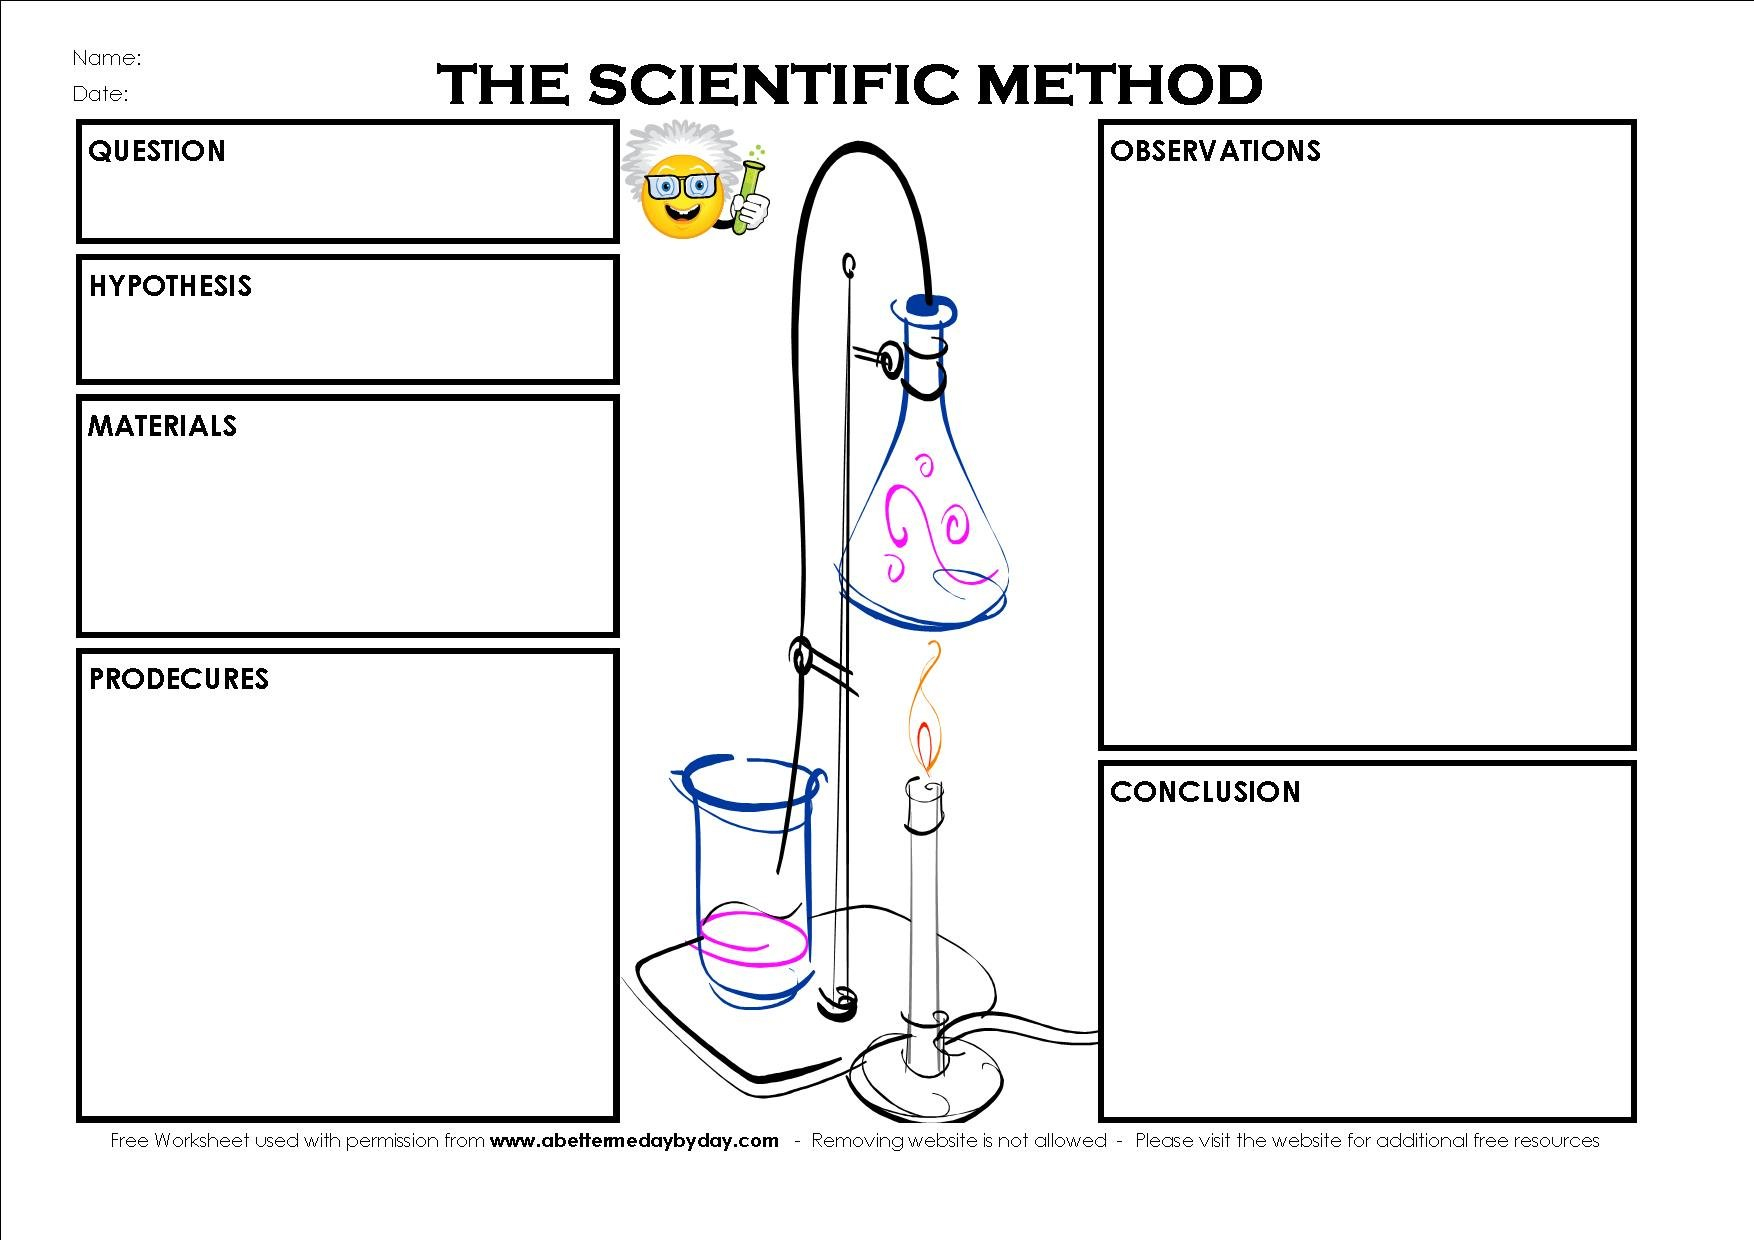 Free Worksheet Elementary Level Scientific Method  A Better Me Day Inside Scientific Method Worksheet Elementary